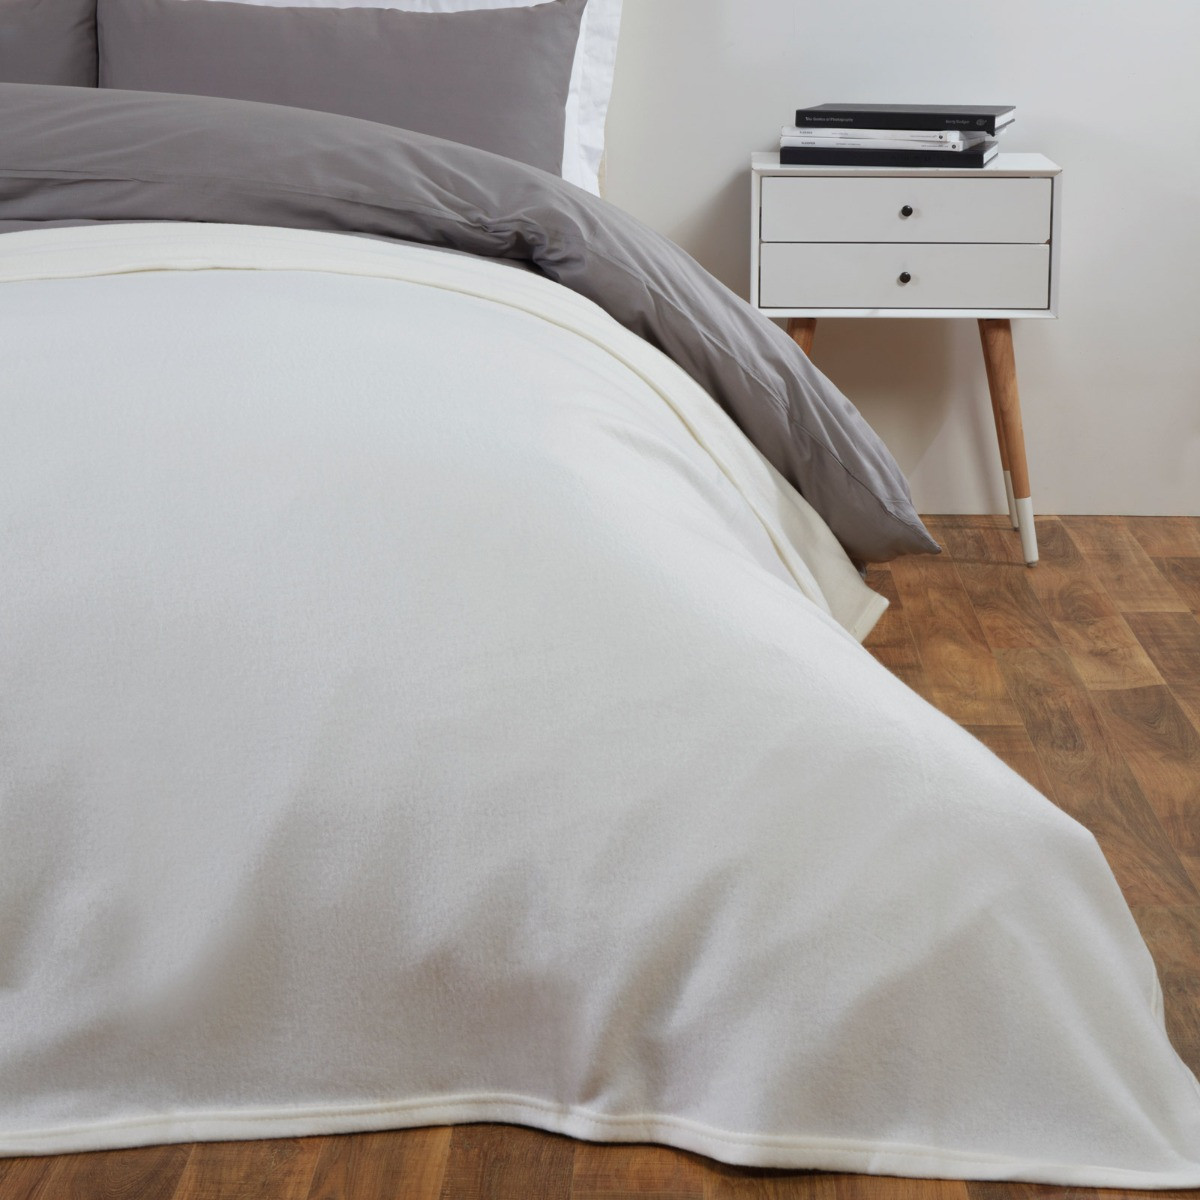 Fleece Blanket 120x150cm - Cream>